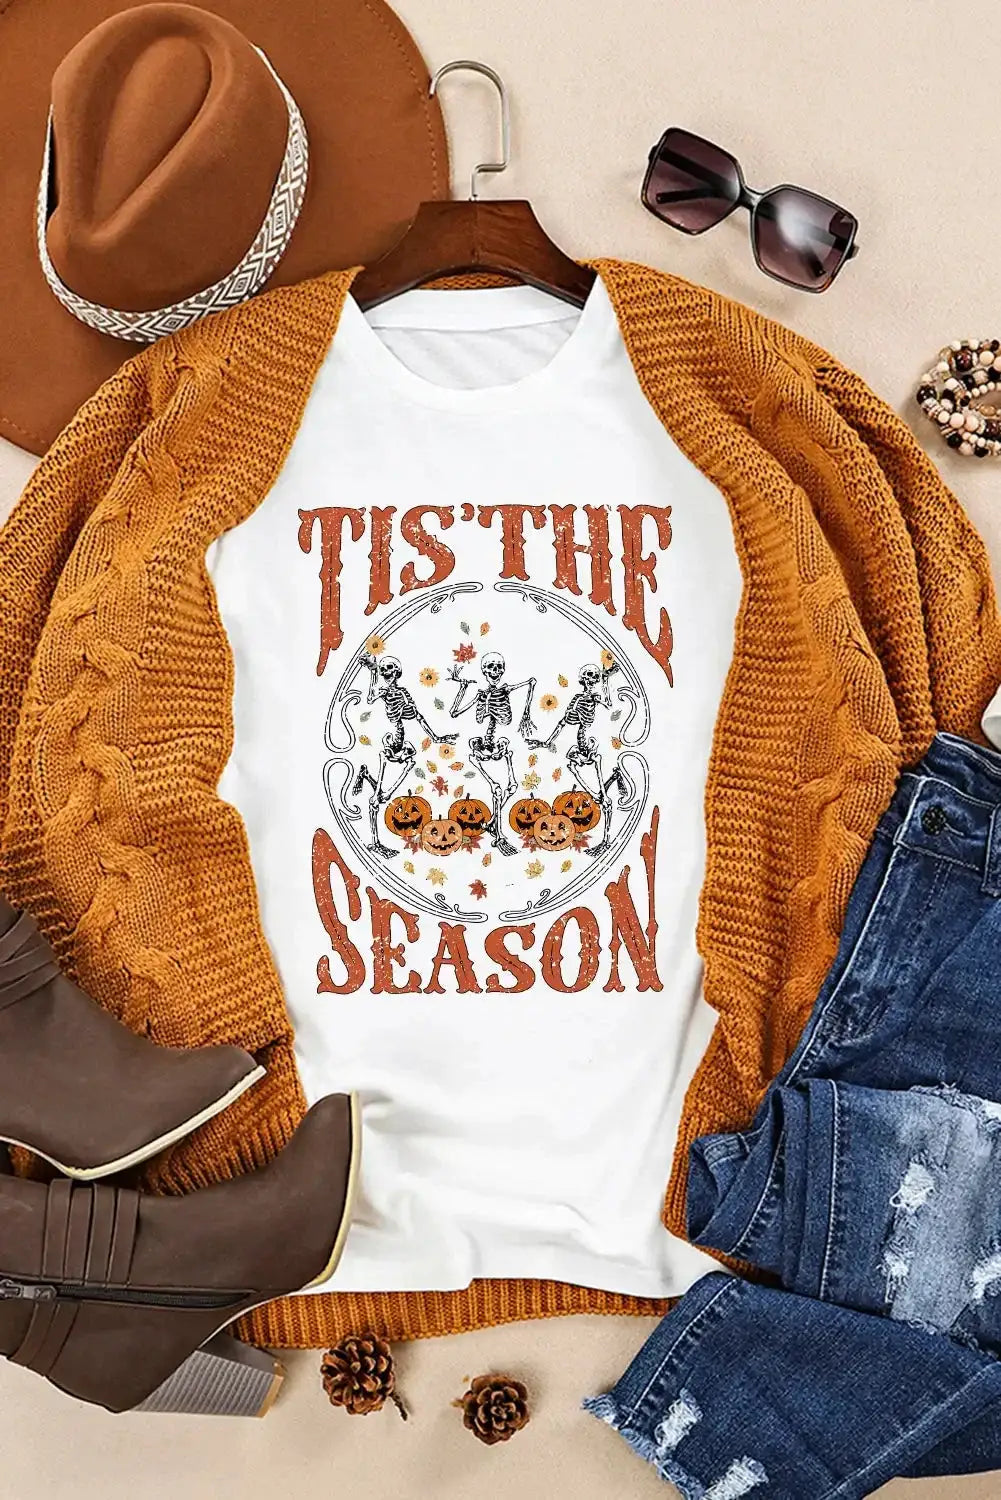 Khaki flannels hayrides pumpkins sweaters bonfires tee - white1 / s / 95% polyester + 5% elastane - graphic t-shirts